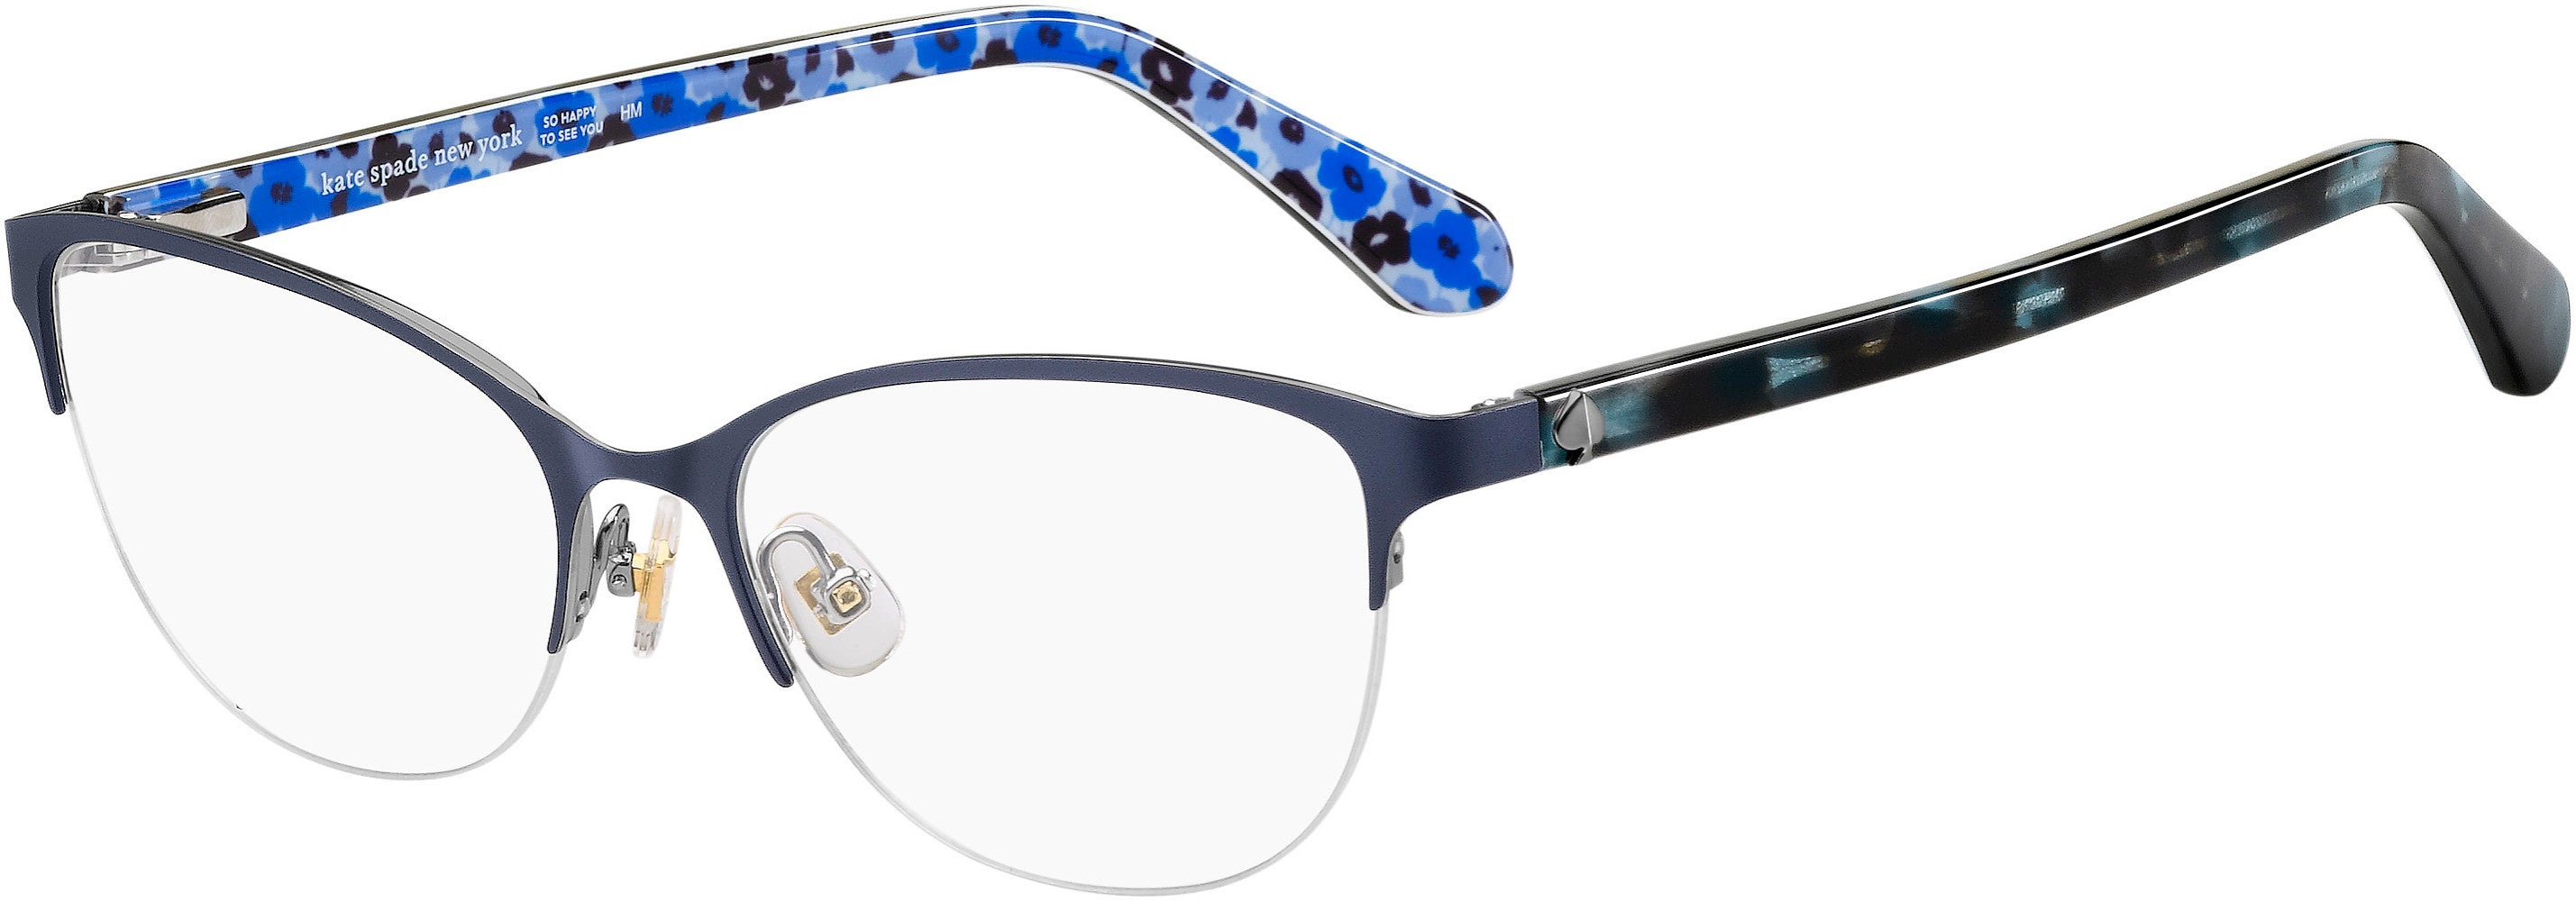 Kate Spade Adalina Cat Eye/butterfly Eyeglasses 0F2G-0F2G  Blumt Silver (00 Demo Lens)